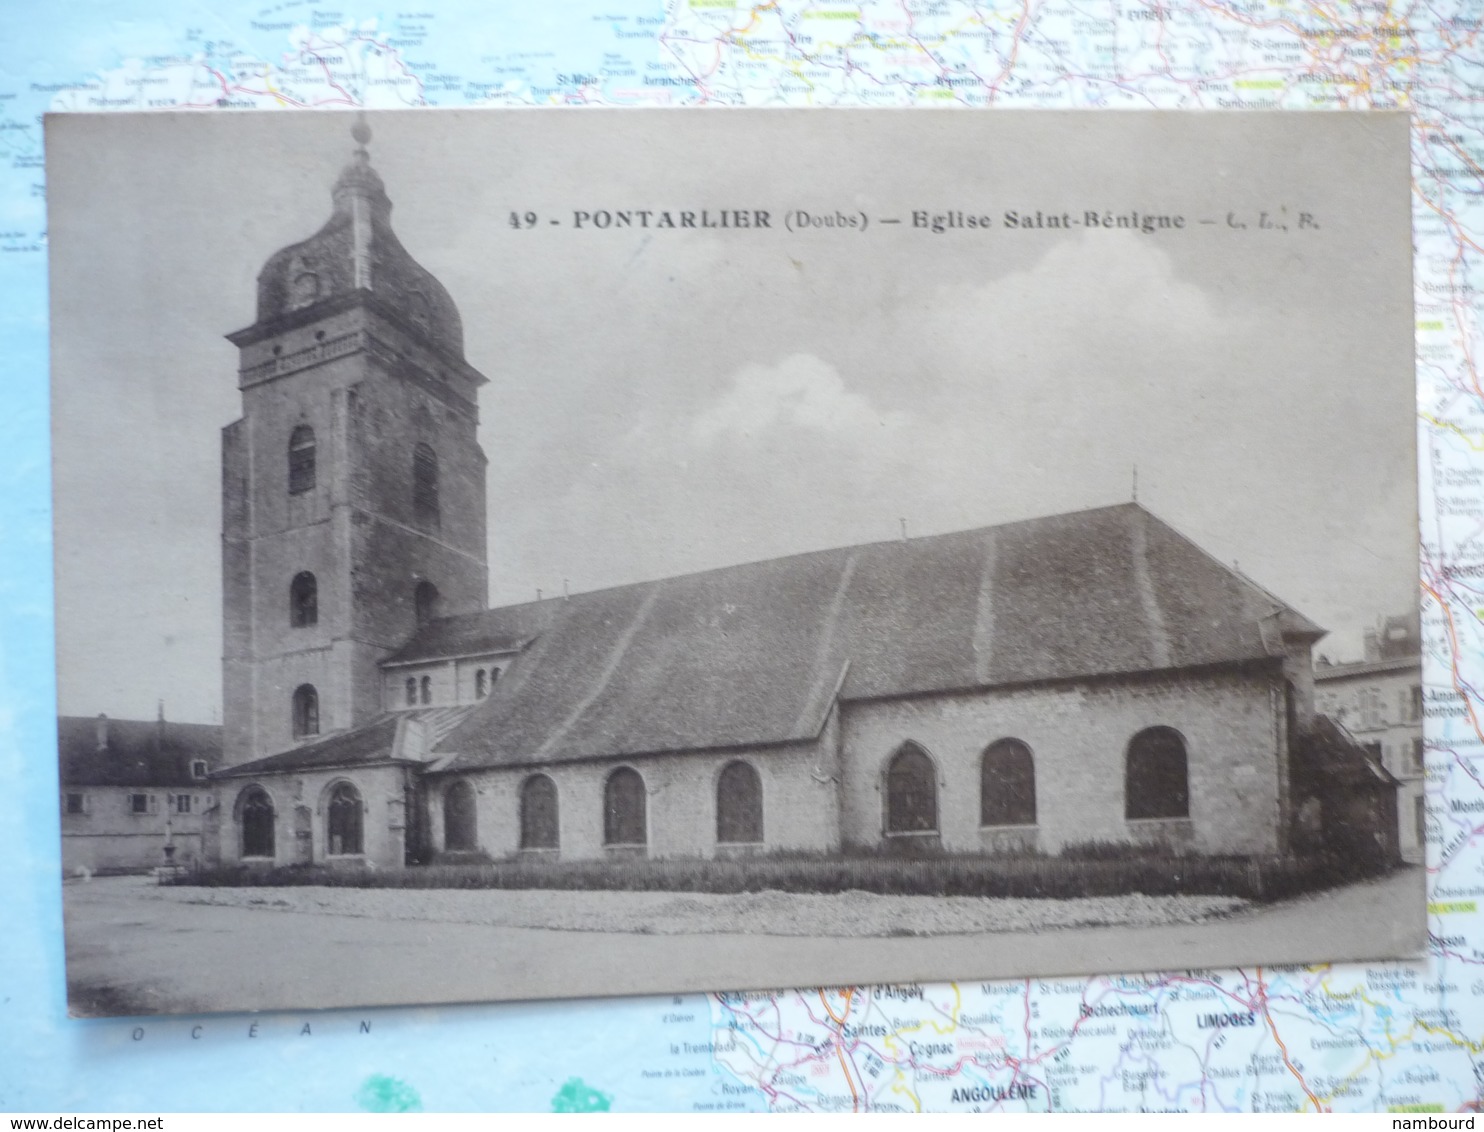 Eglise Saint-Benigne - Pontarlier